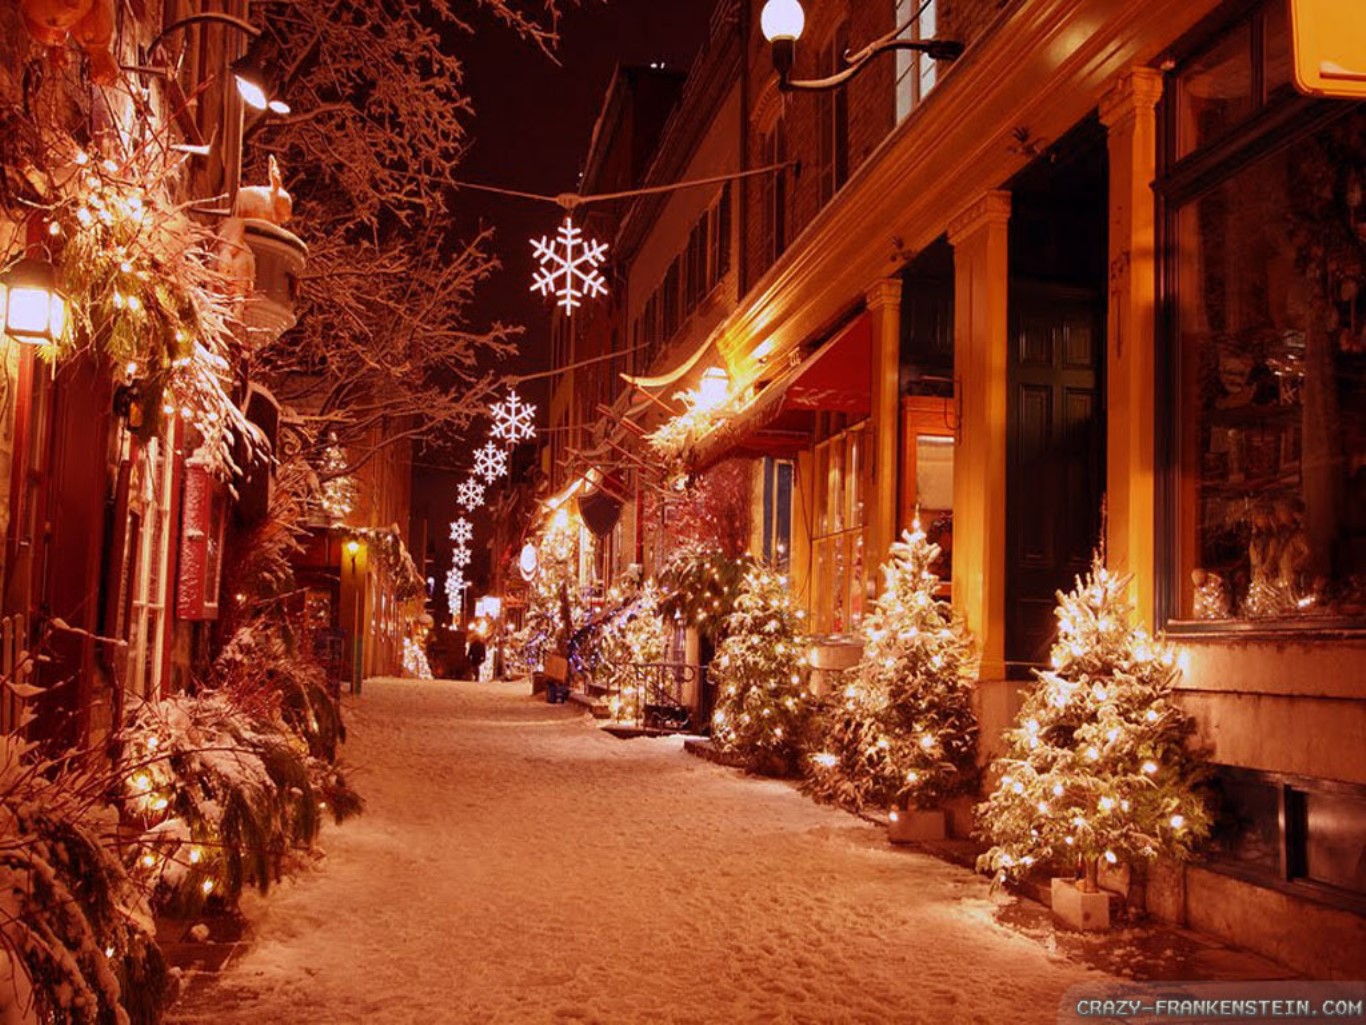 Christmas Street Decoration - Christmas Photo (36200303) - Fanpop